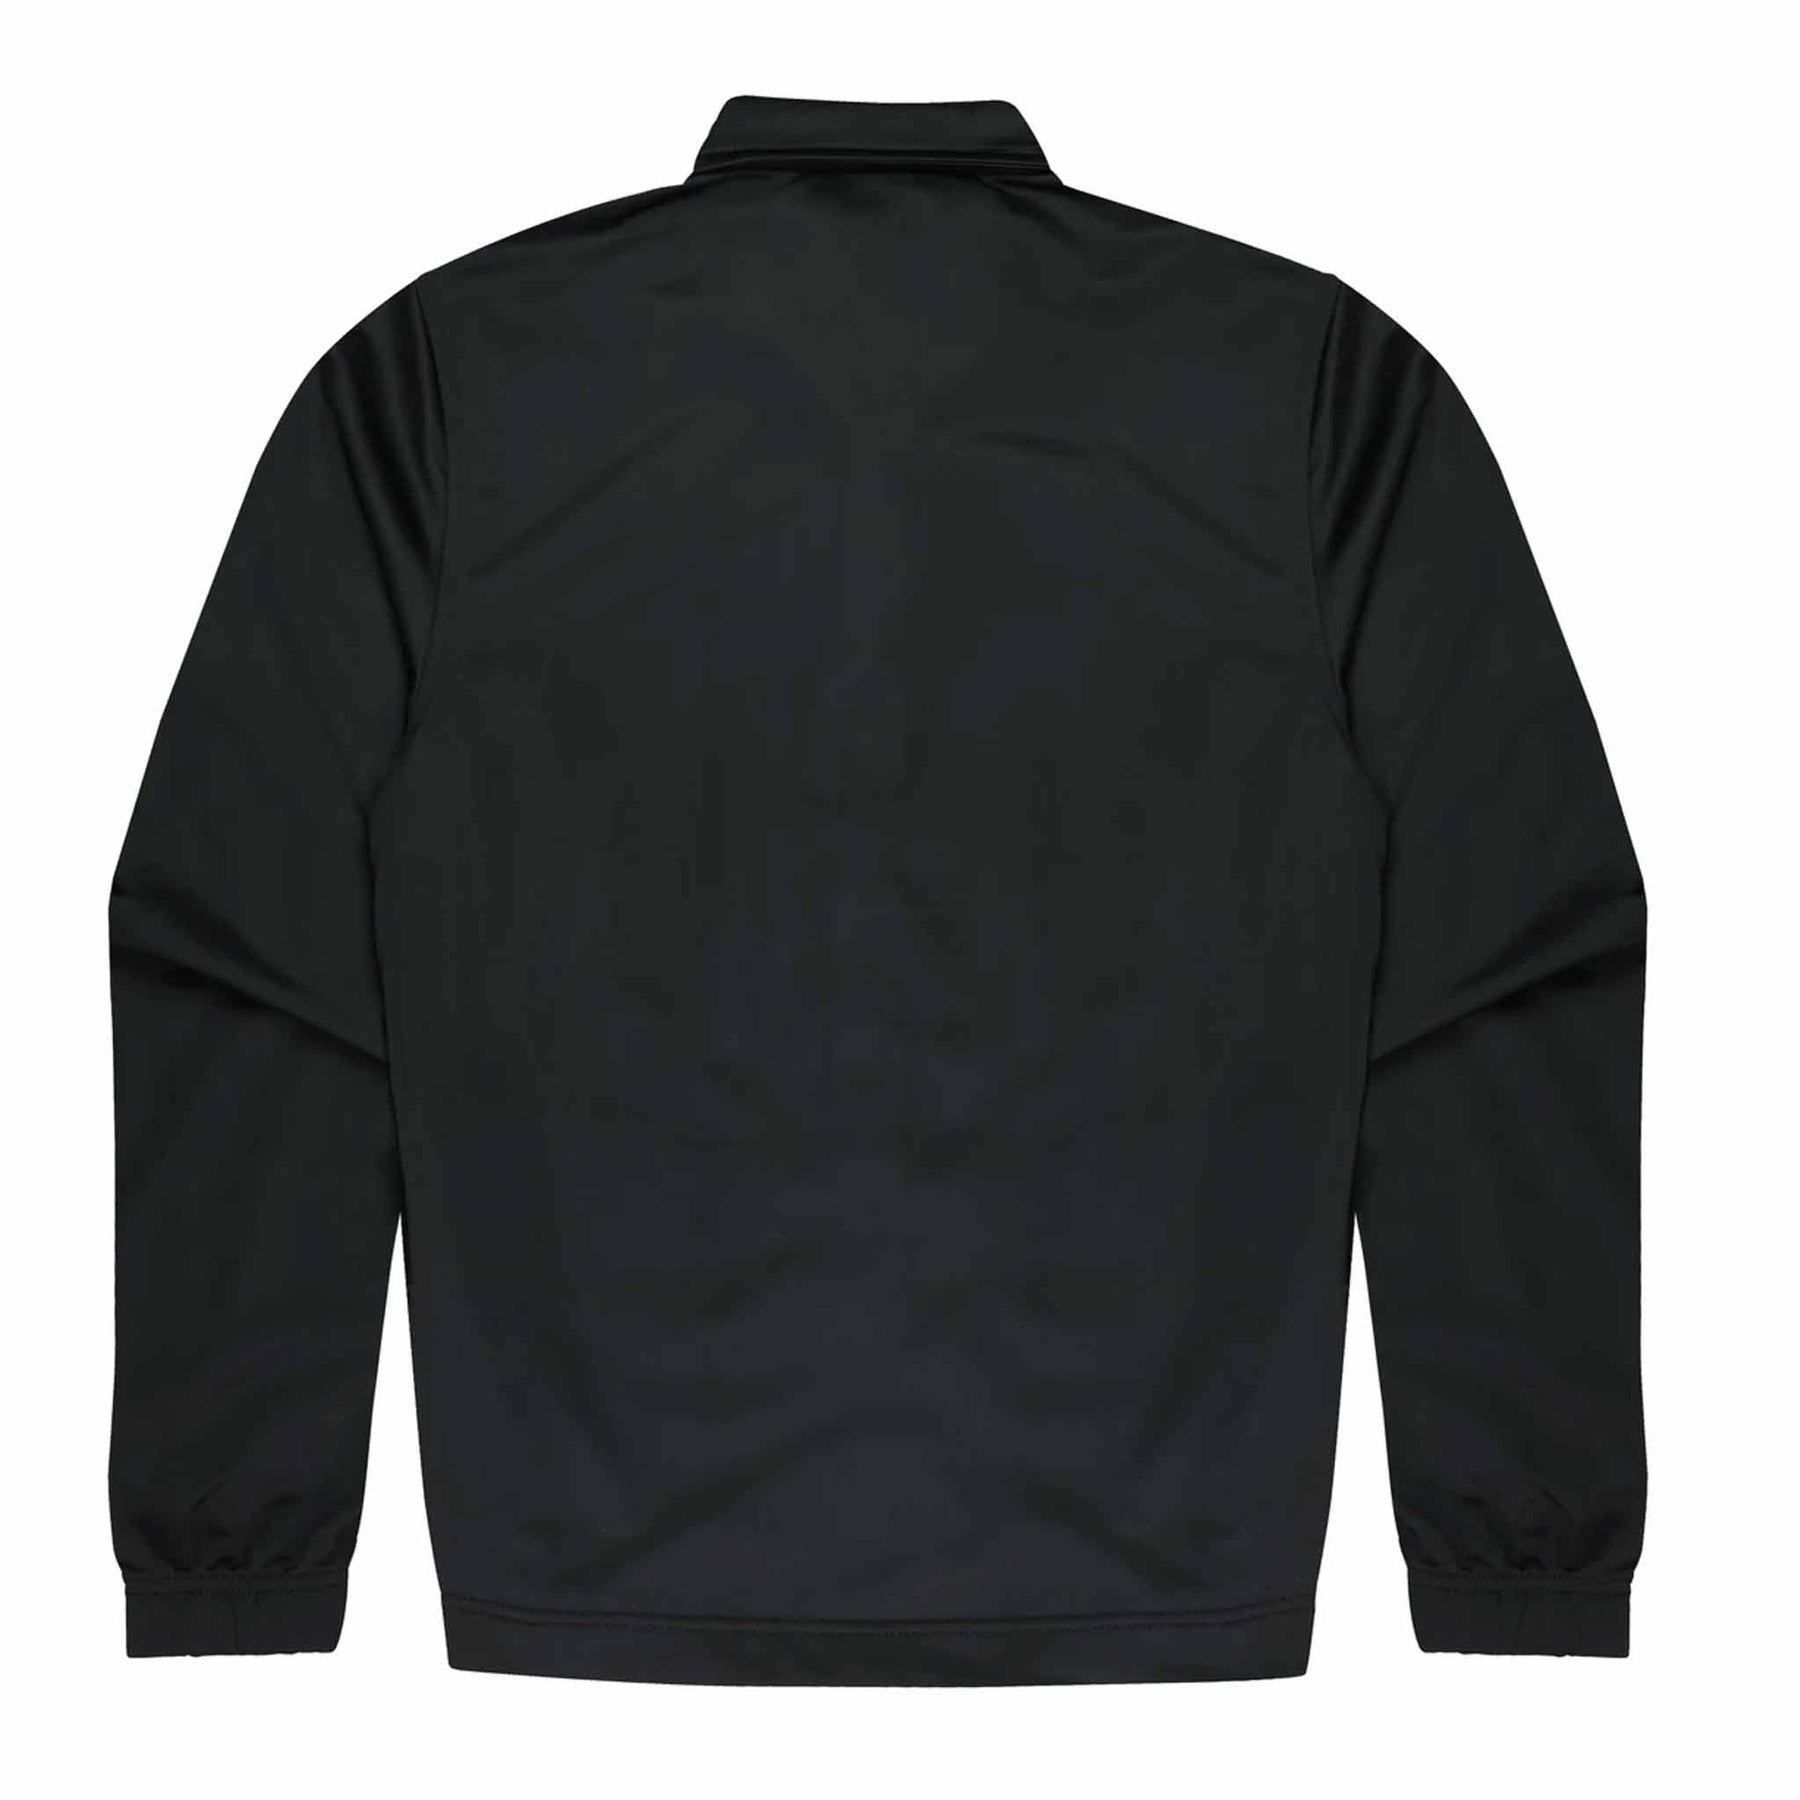 aussie pacific liverpool jacket in black